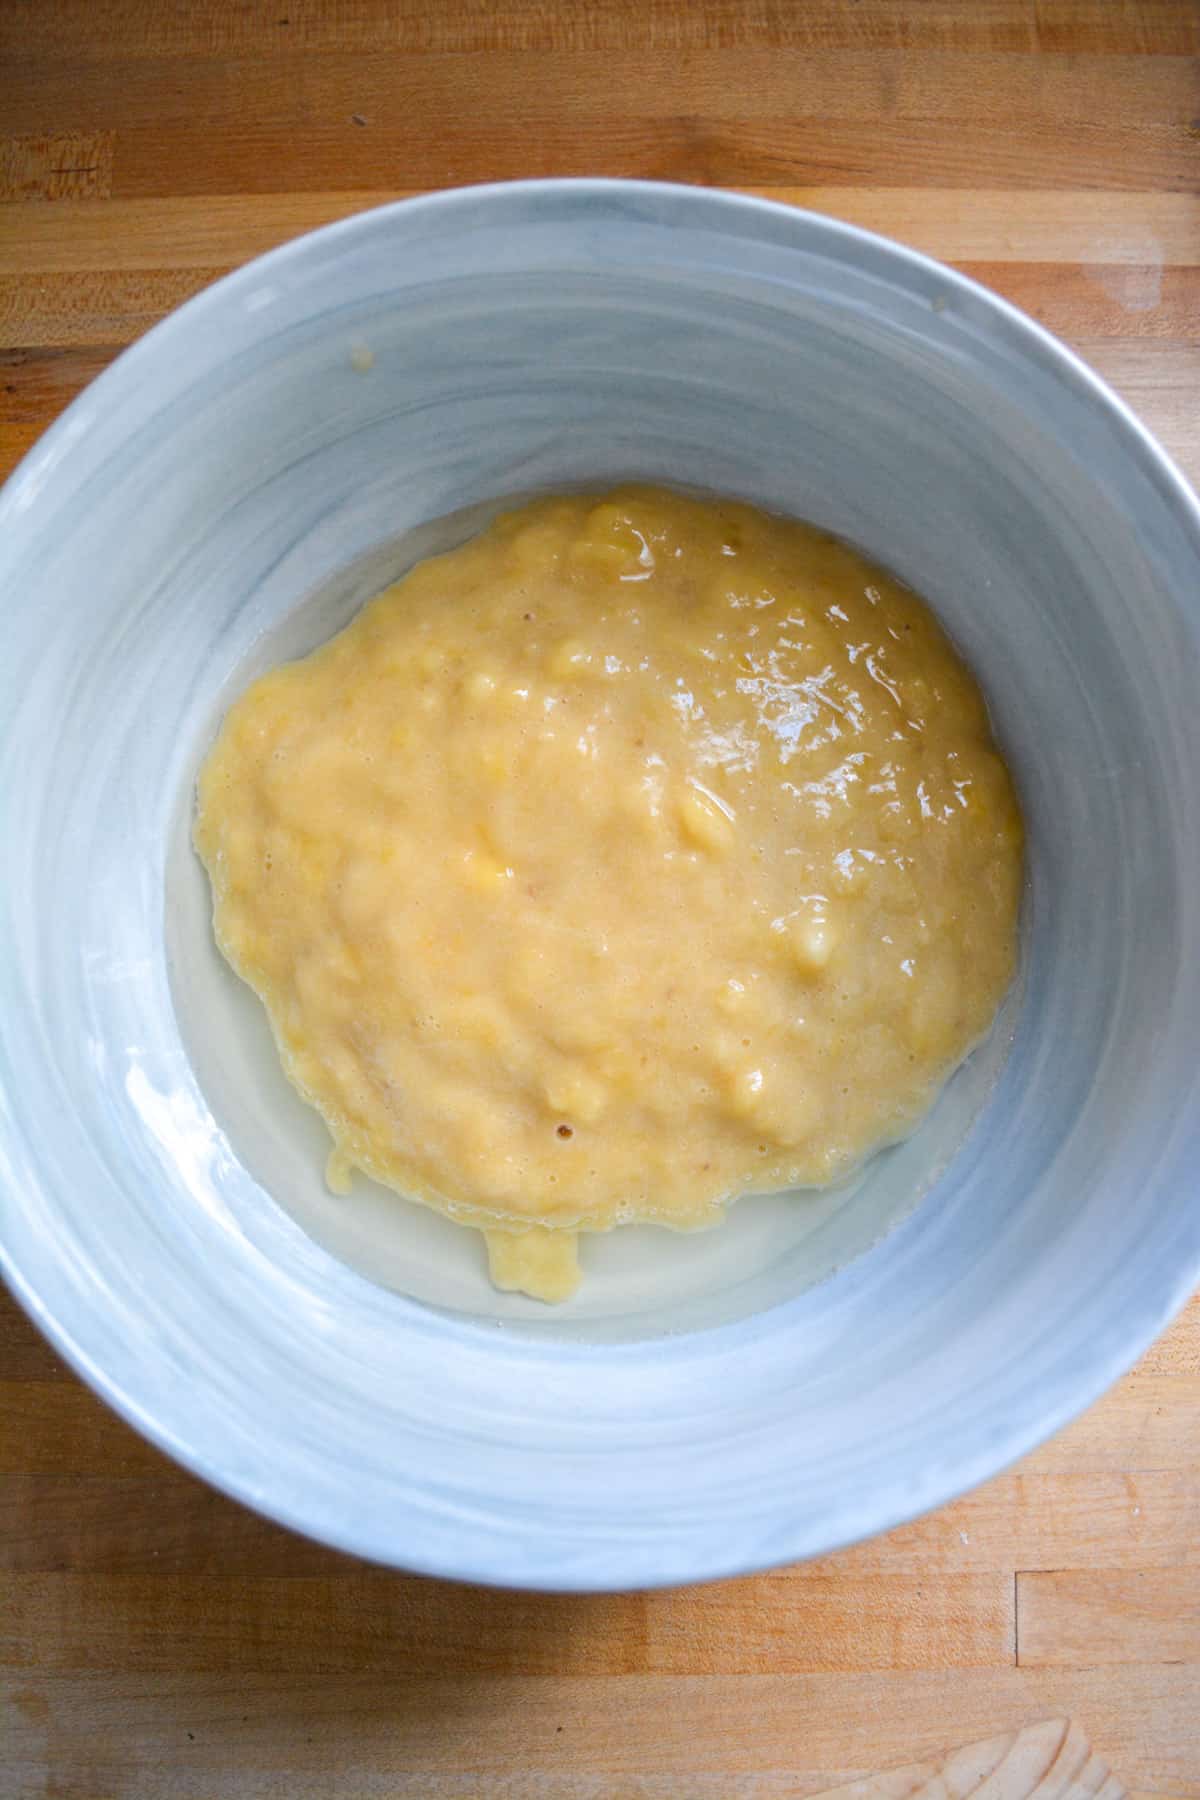 Mashed banana, oil and sugar in a mixing bowl.